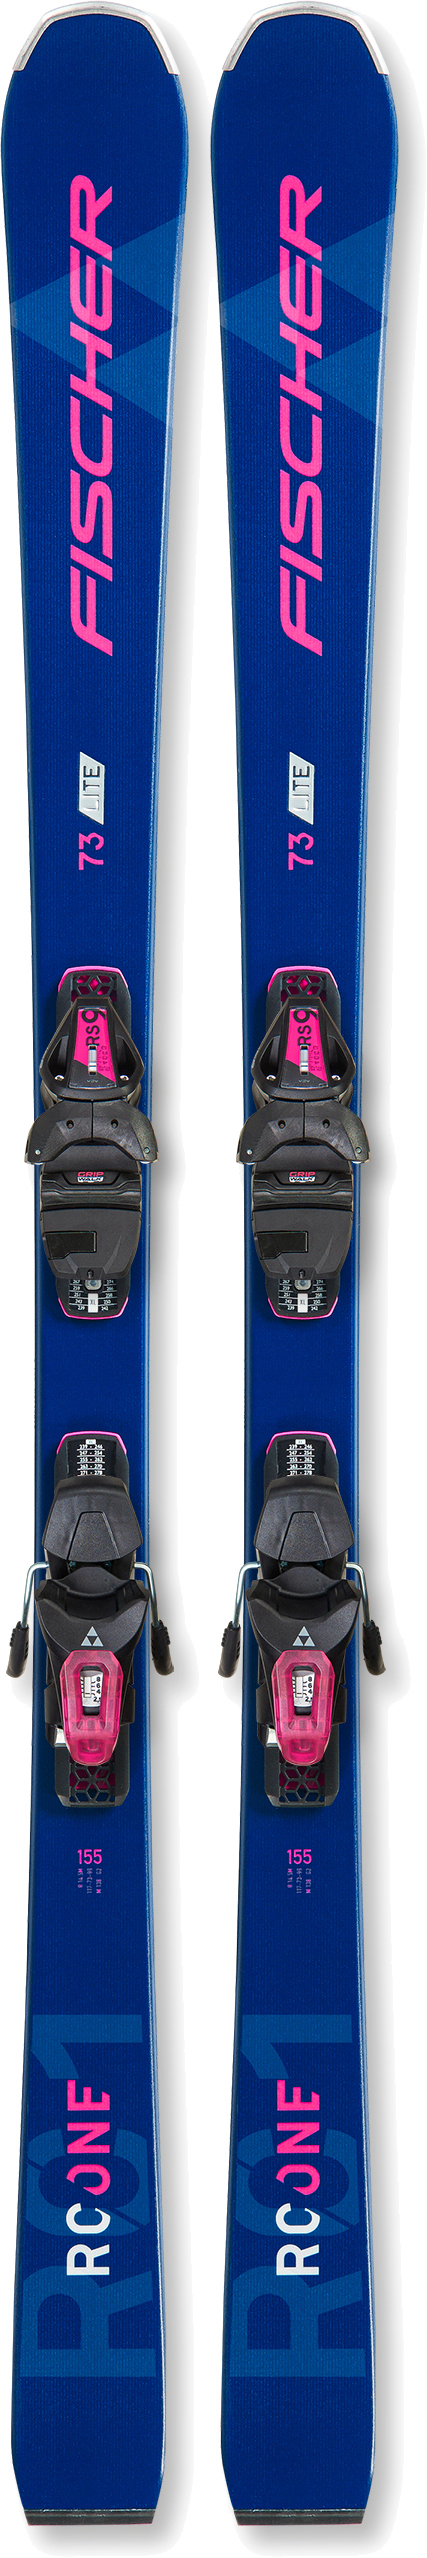 Универсальные лыжи Fischer RC ONE LITE 73 Slr  + RS 9 SLR, T51321 148 см